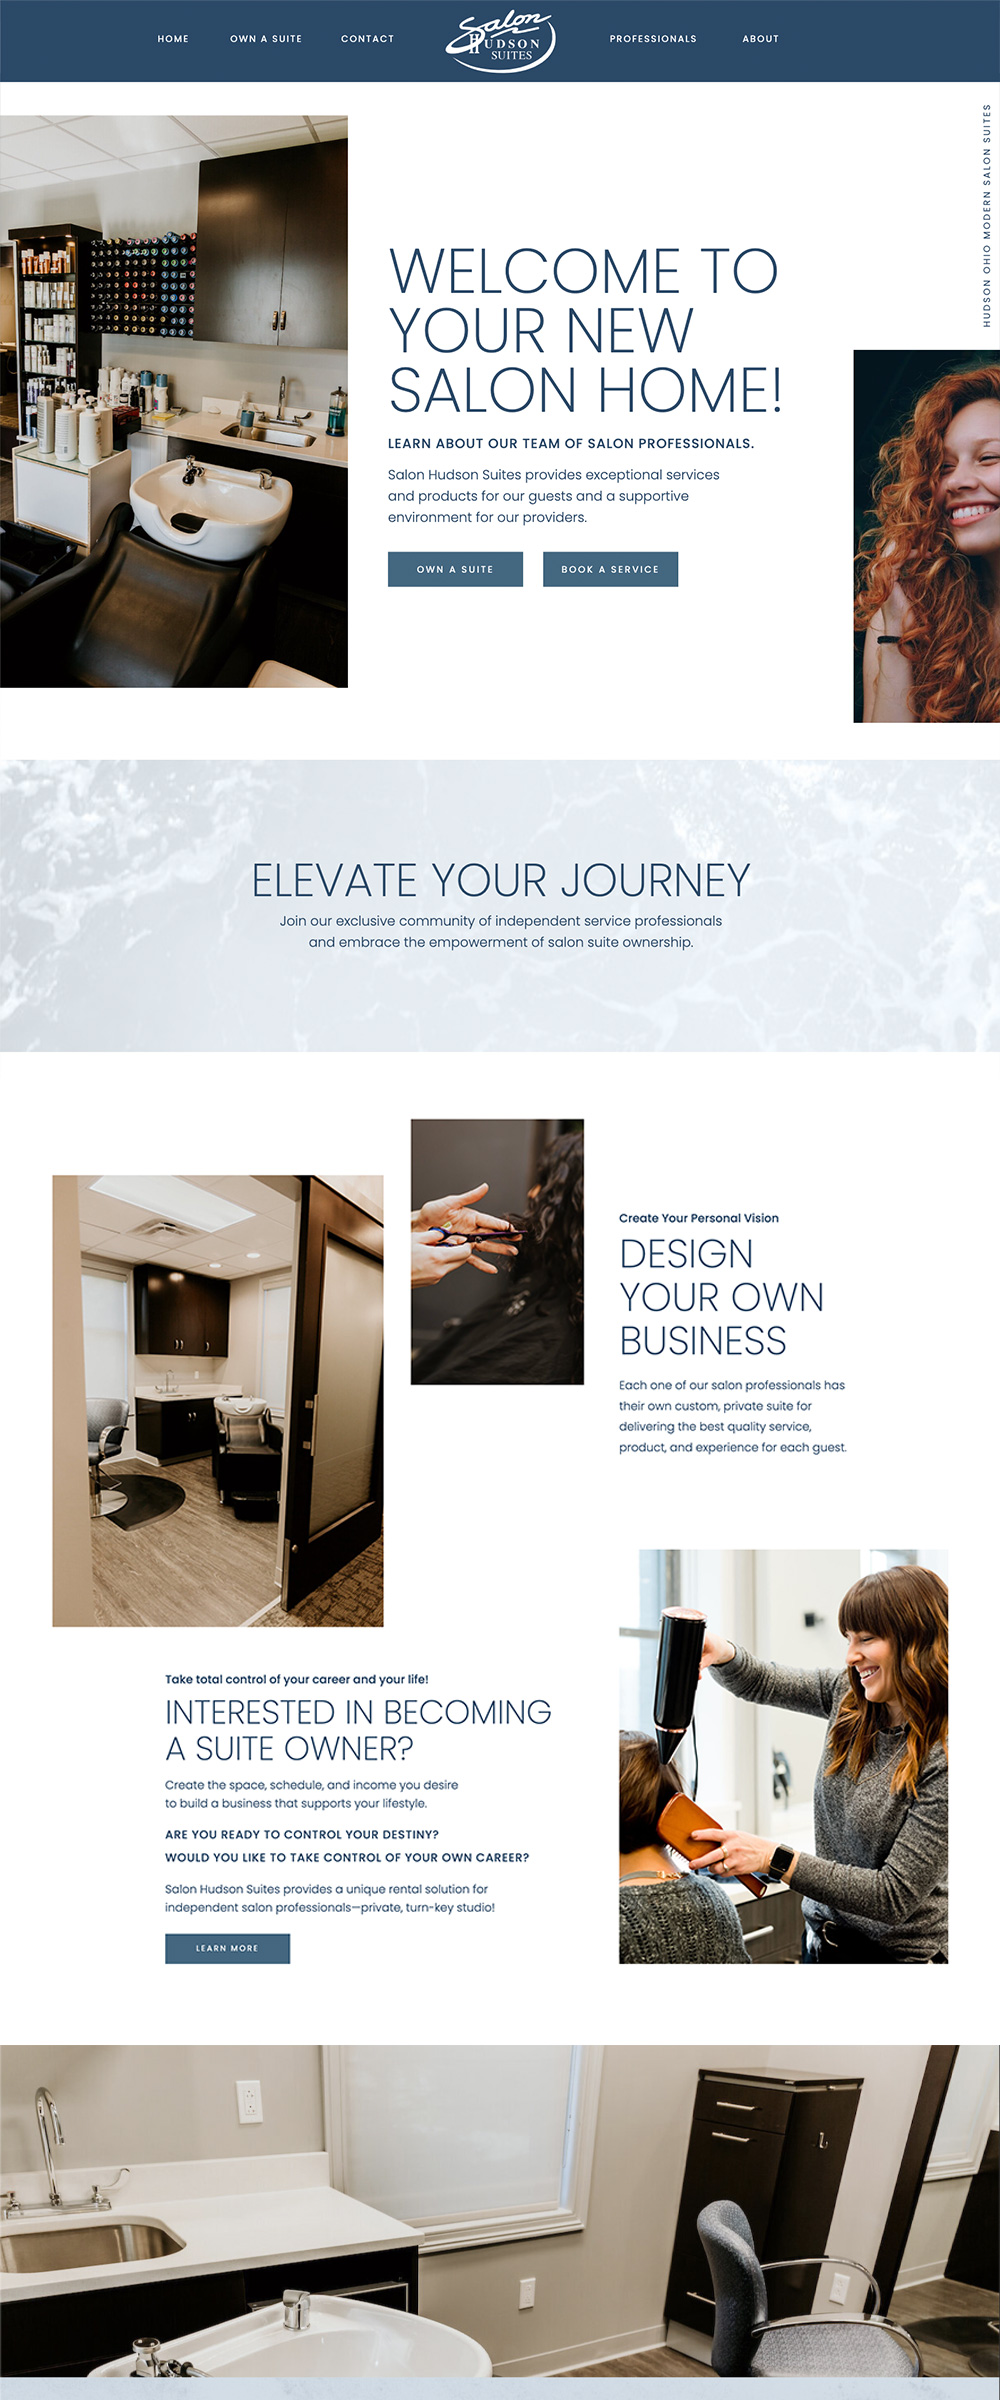 Showit Website Design for Modern Salon Suites | Salon Hudson Suites - by Hey Hello Studio